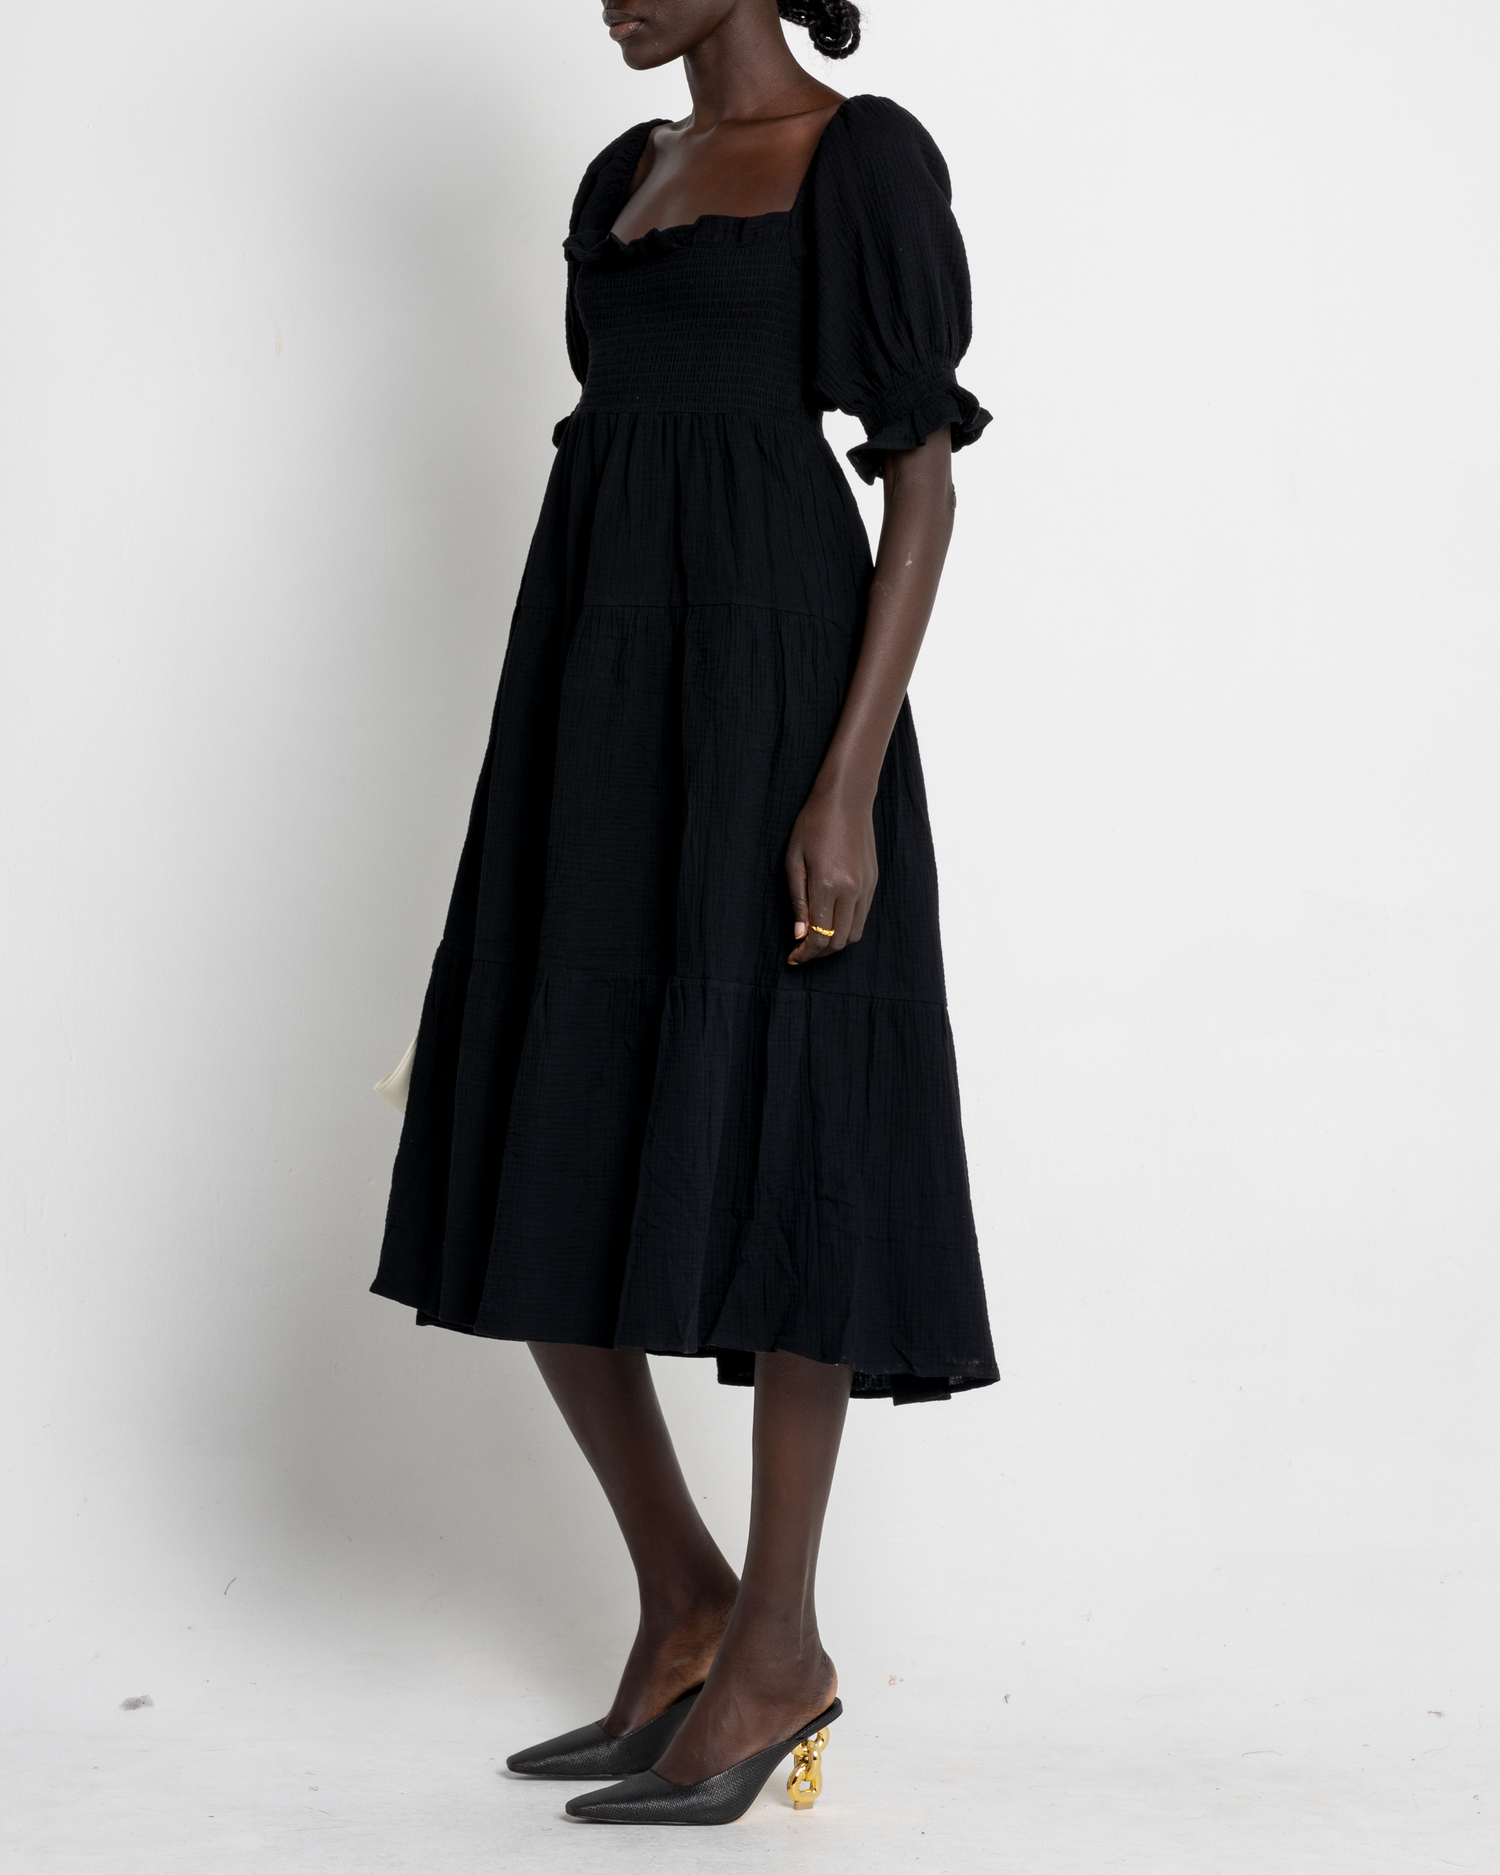 Sixth image of Frankie Dress, a black midi dress, puff sleeves, short sleeves